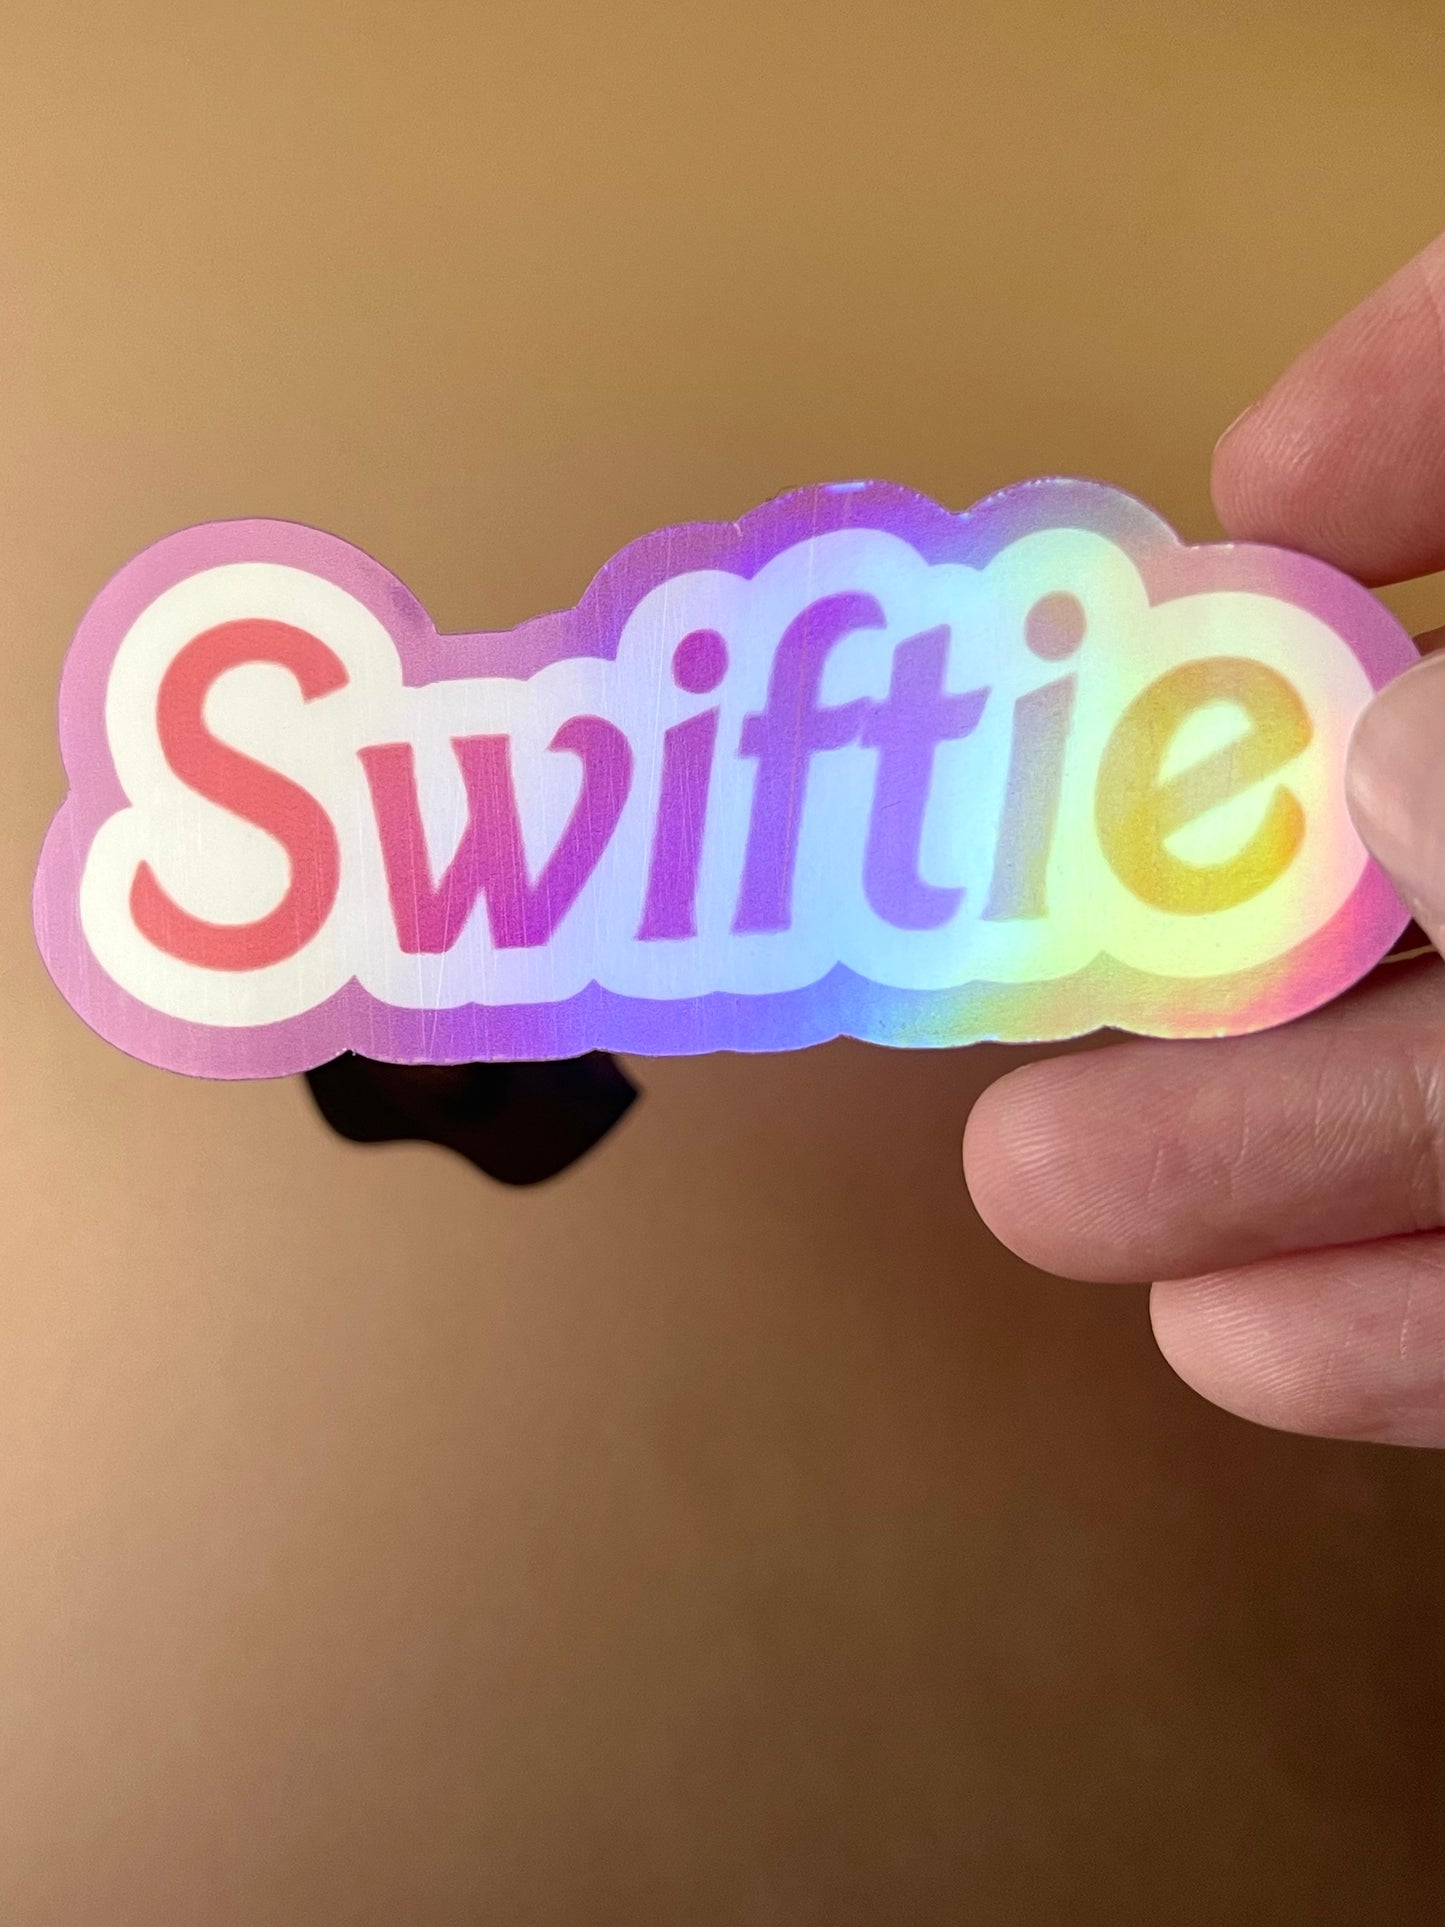 Taylor Swift “Swiftie” Iridescent Sticker